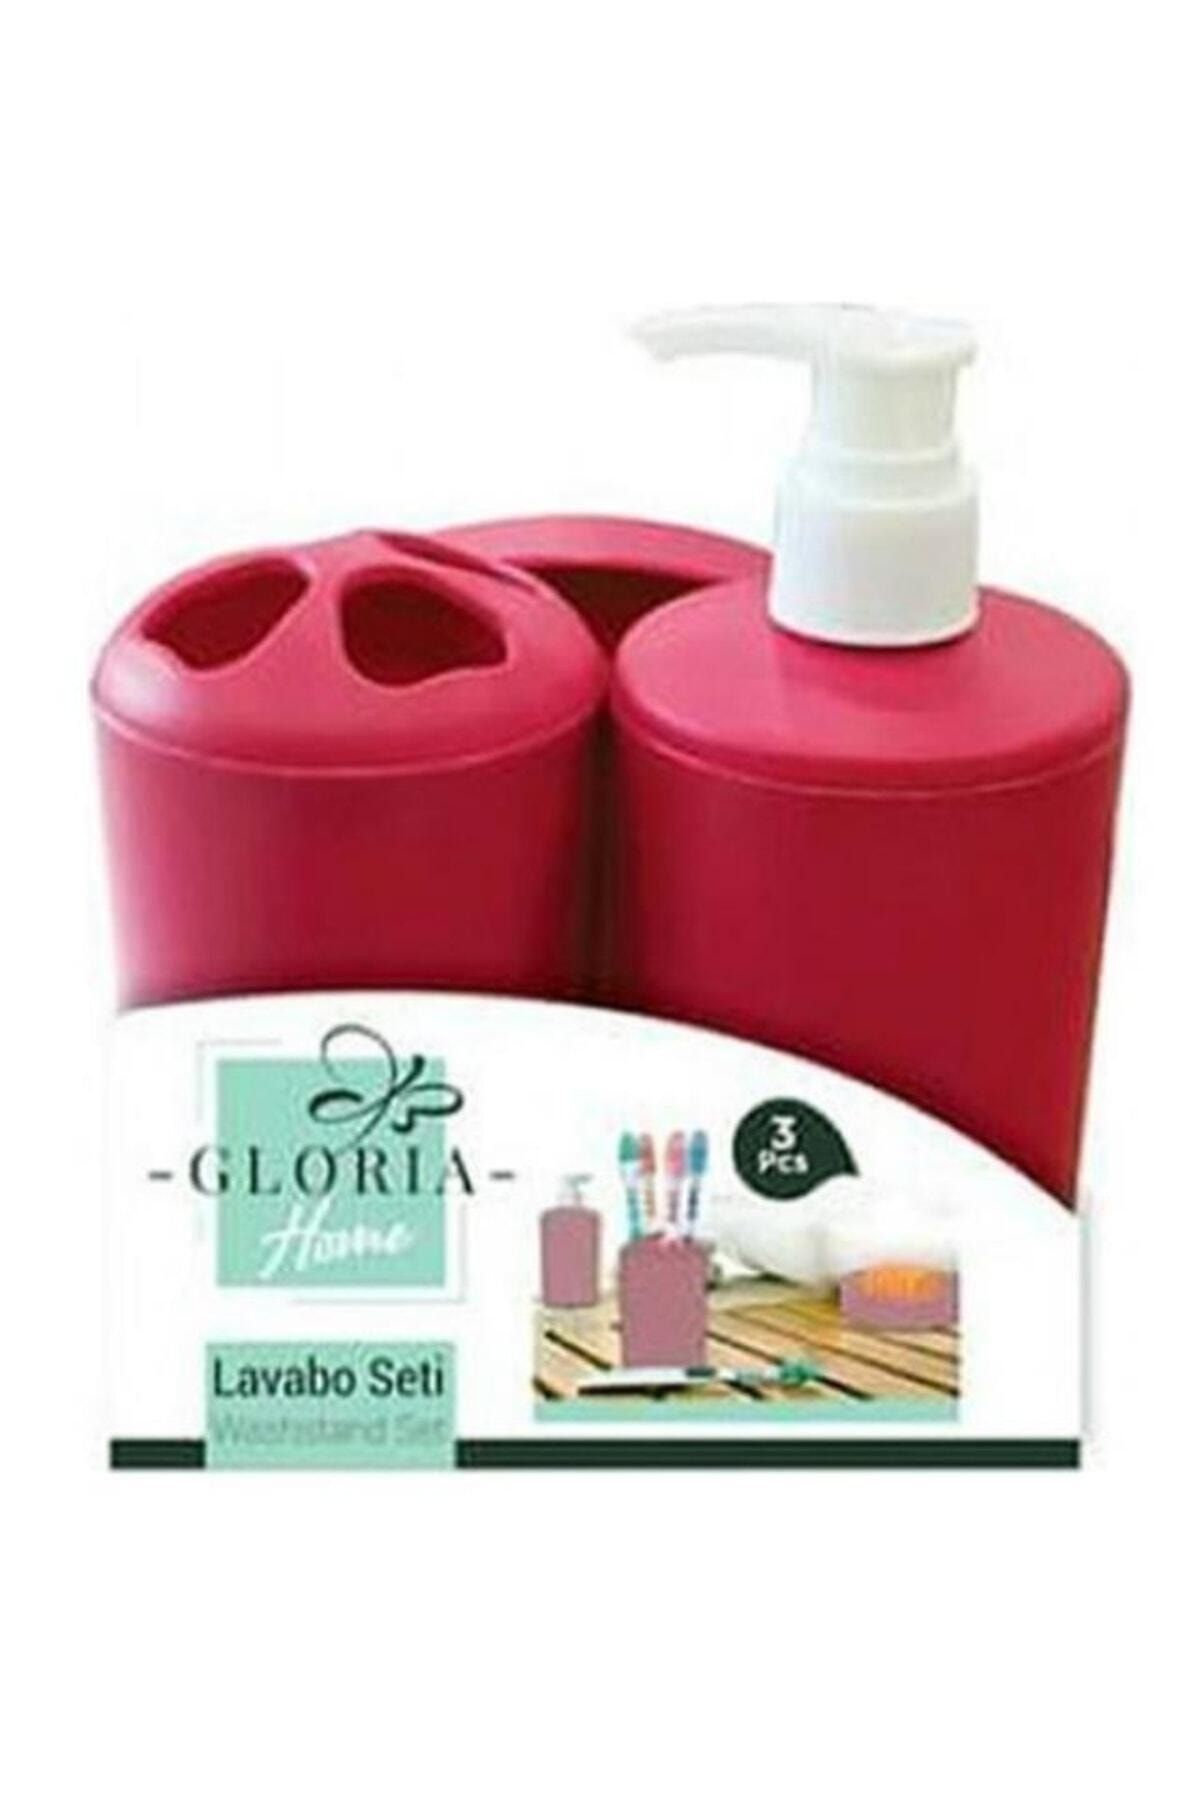 Gloria Home Plastik Lavabo Seti 3'lü Kırmızı